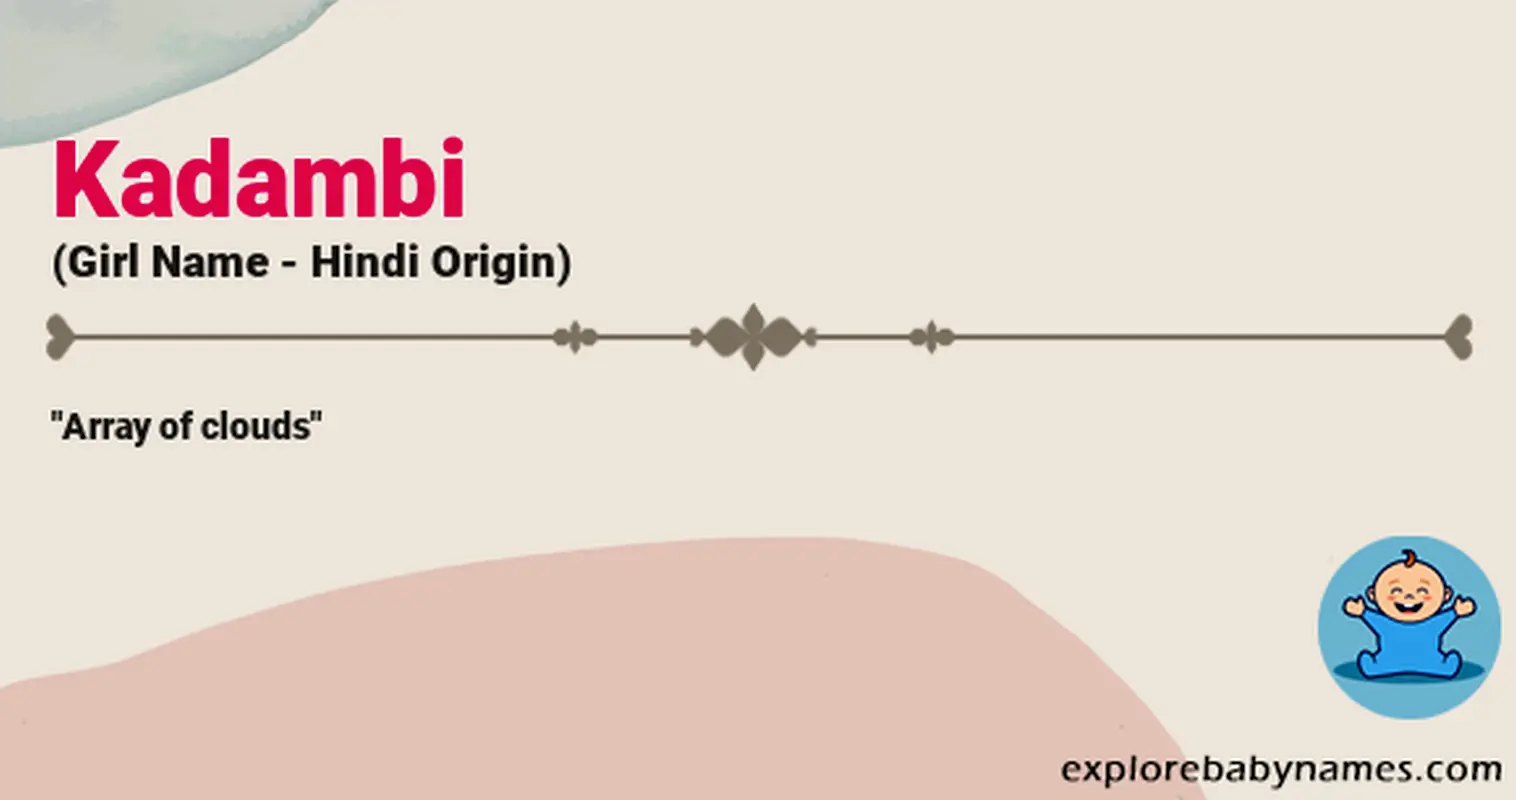 Meaning of Kadambi